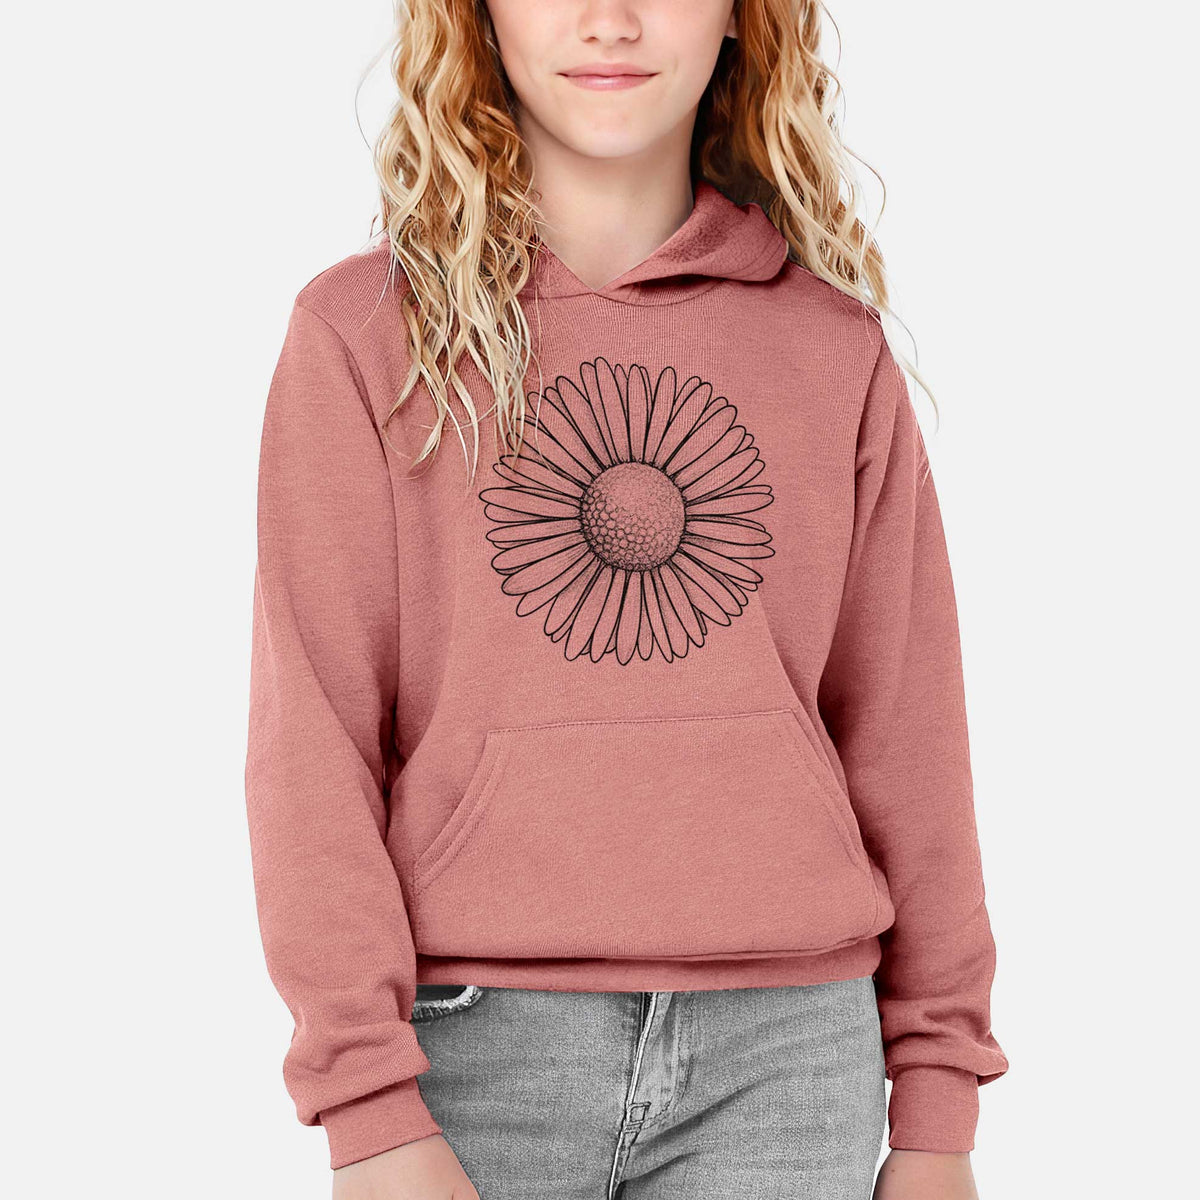 Bellis perennis - The Common Daisy - Youth Hoodie Sweatshirt